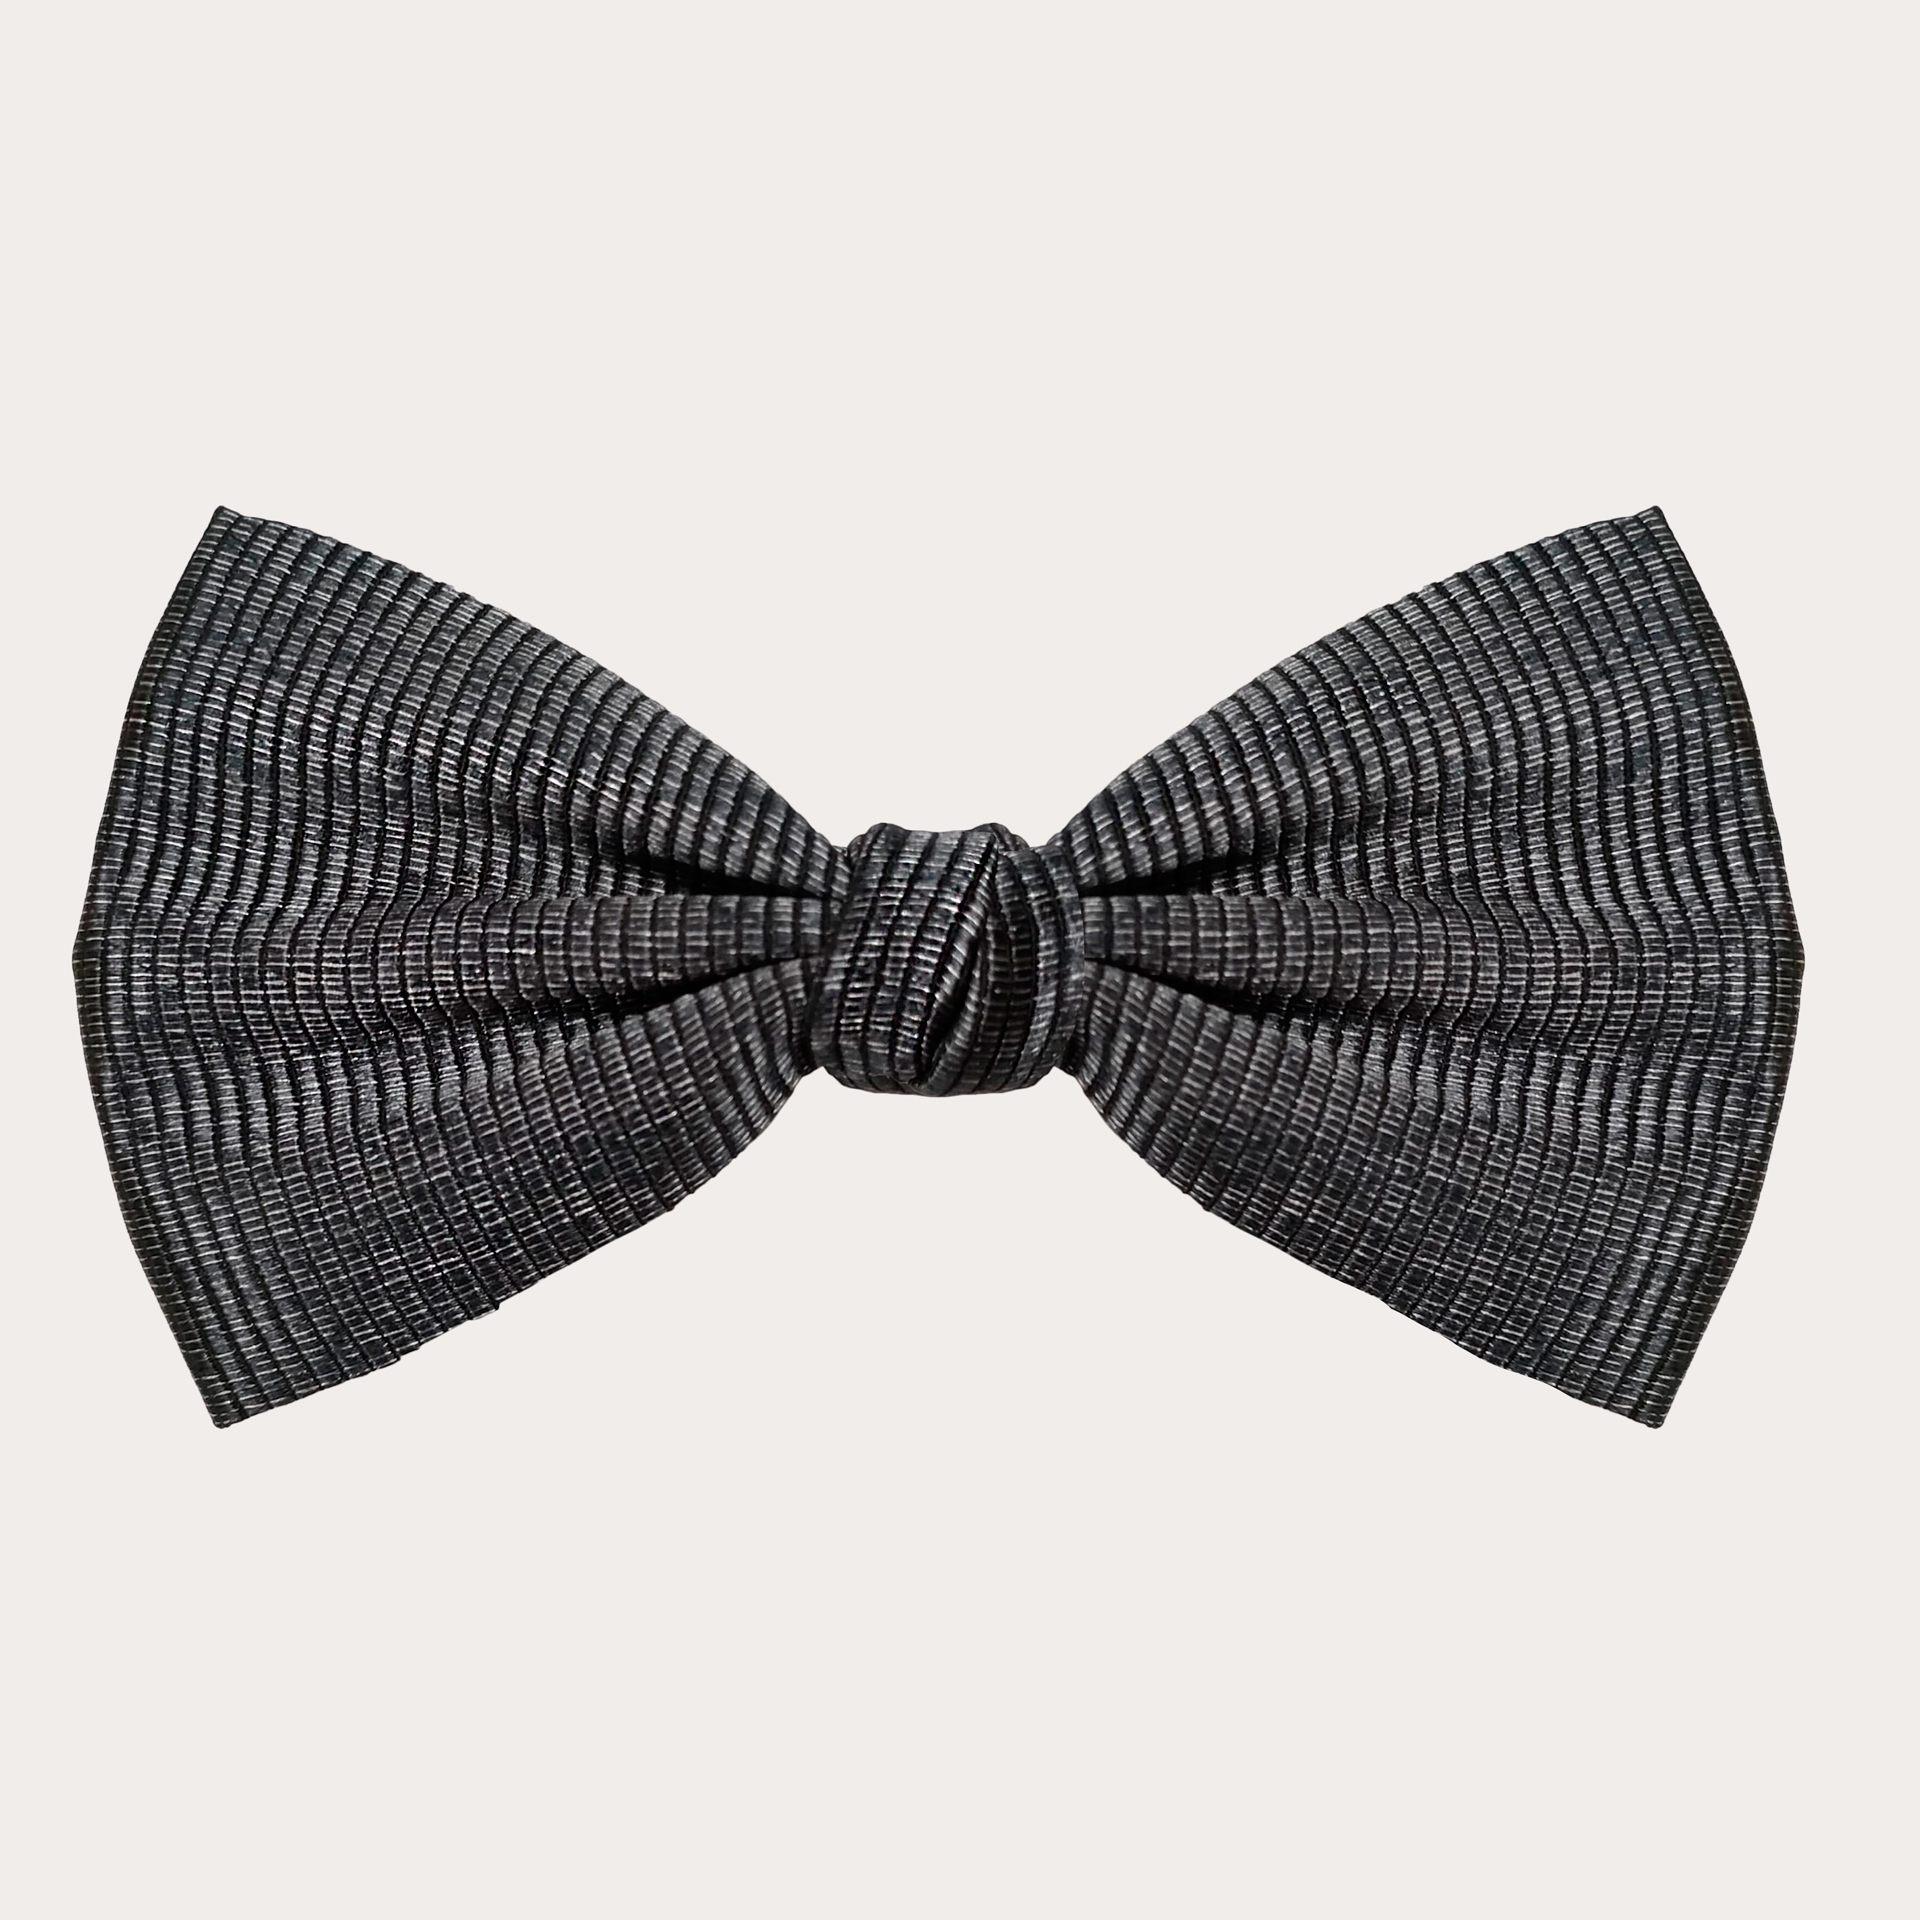 Men's bow tie in black and silver melange jacquard silk